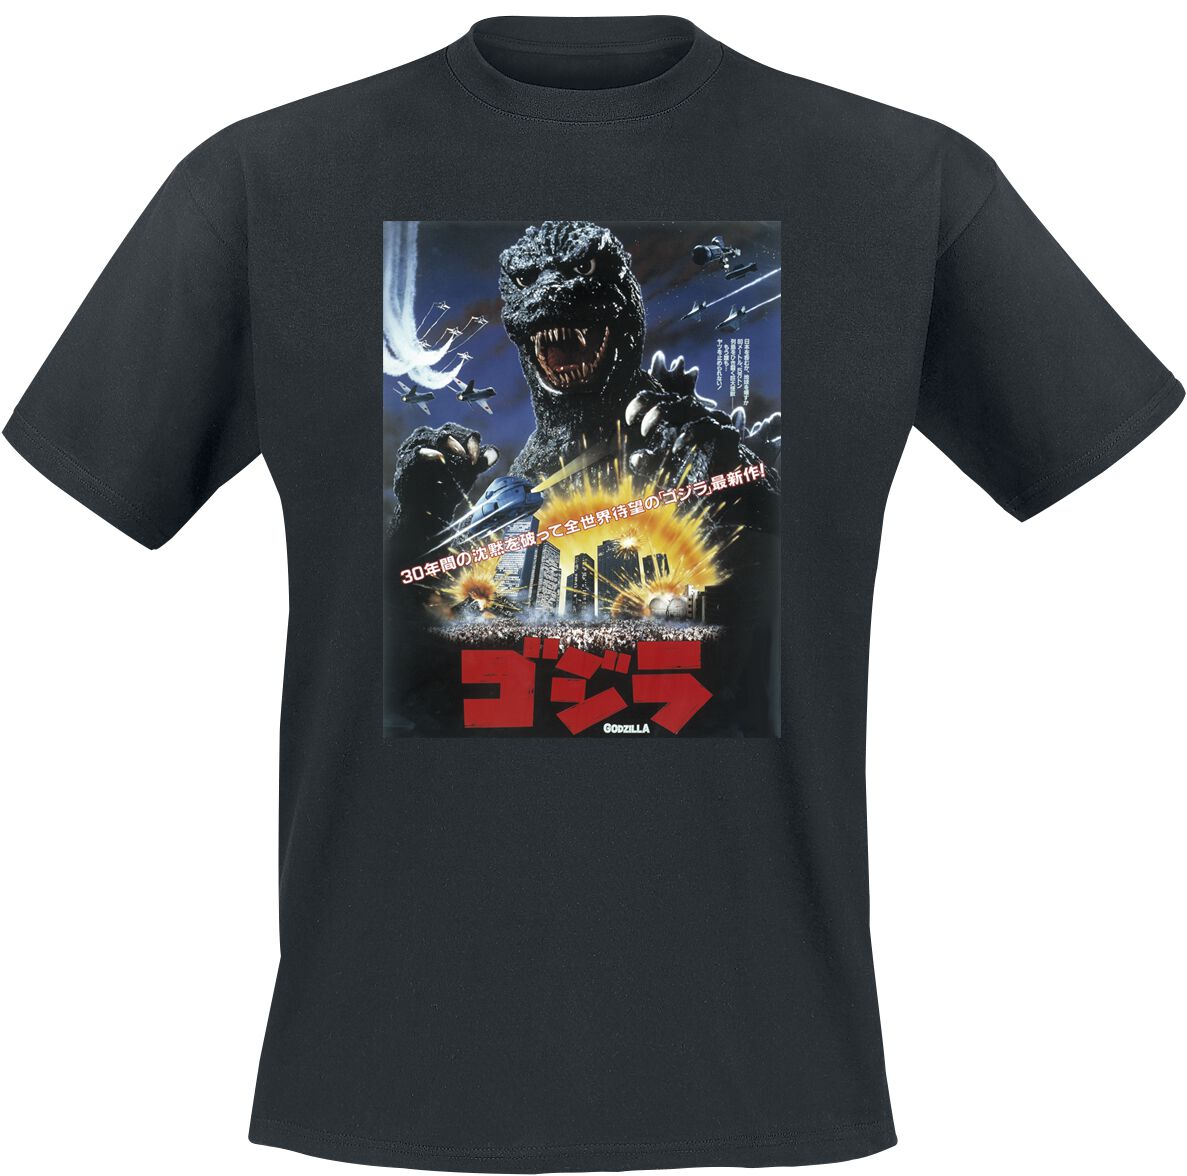 Godzilla Return of Godzilla T-Shirt schwarz in XL GZ-TS-3099